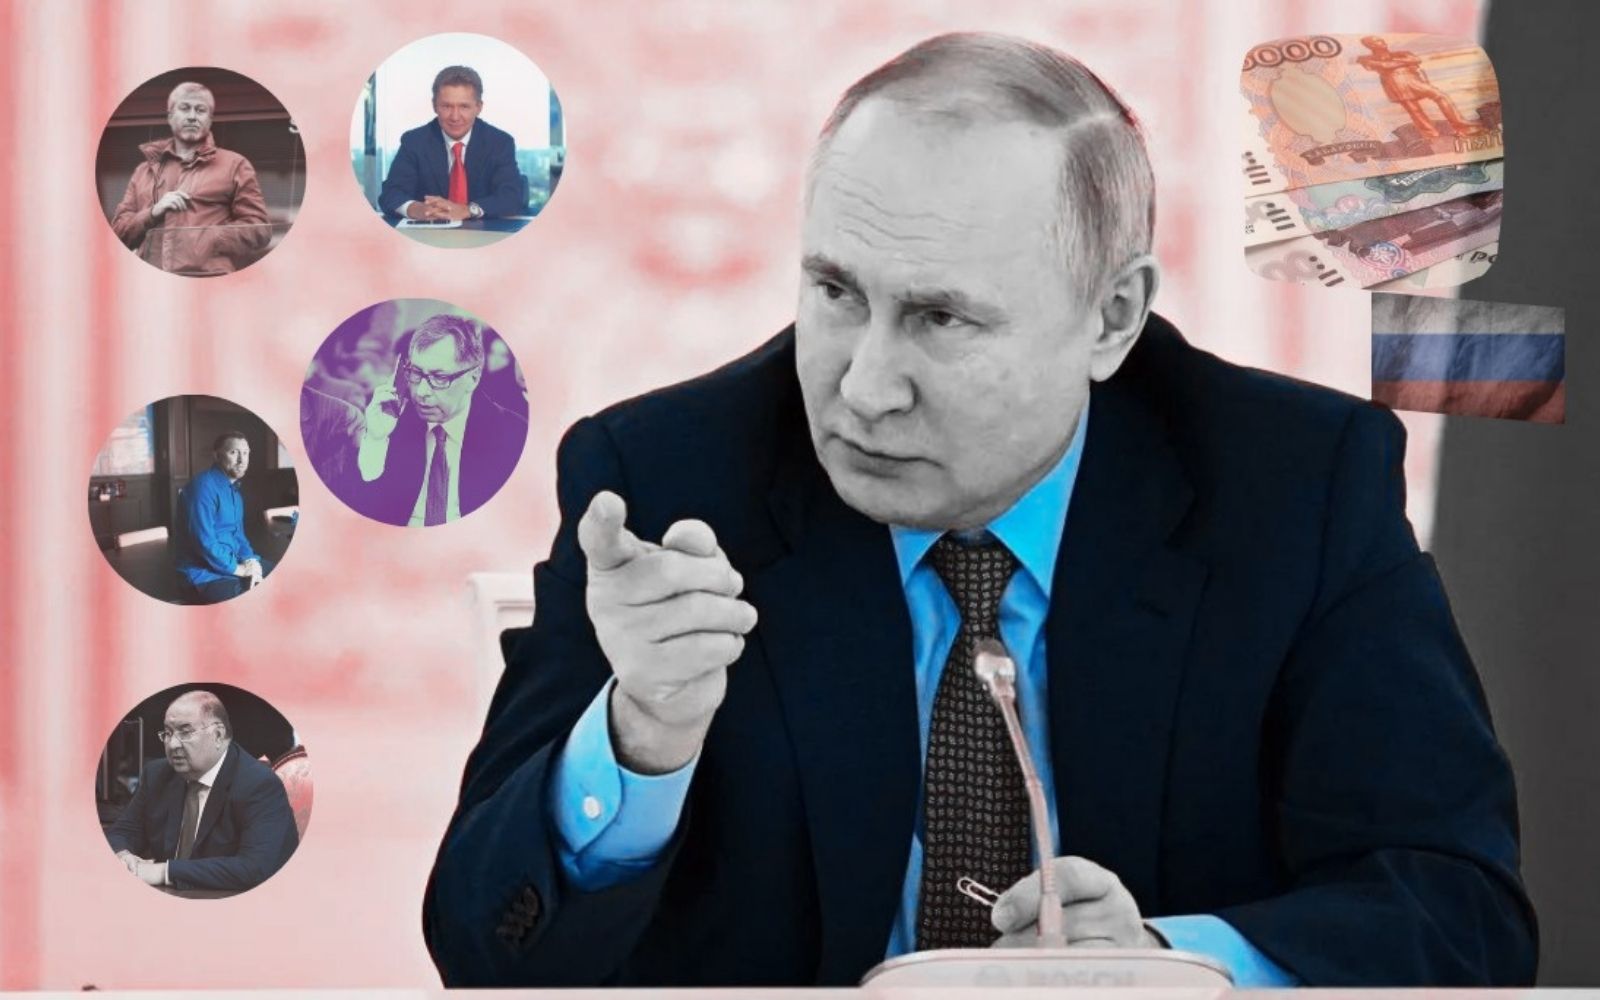 Vladimir Putin e oligarcas milionários russos. Foto: reprodução/Sputnik/Aleksey Nikolskyi/Kremlin via Reuters